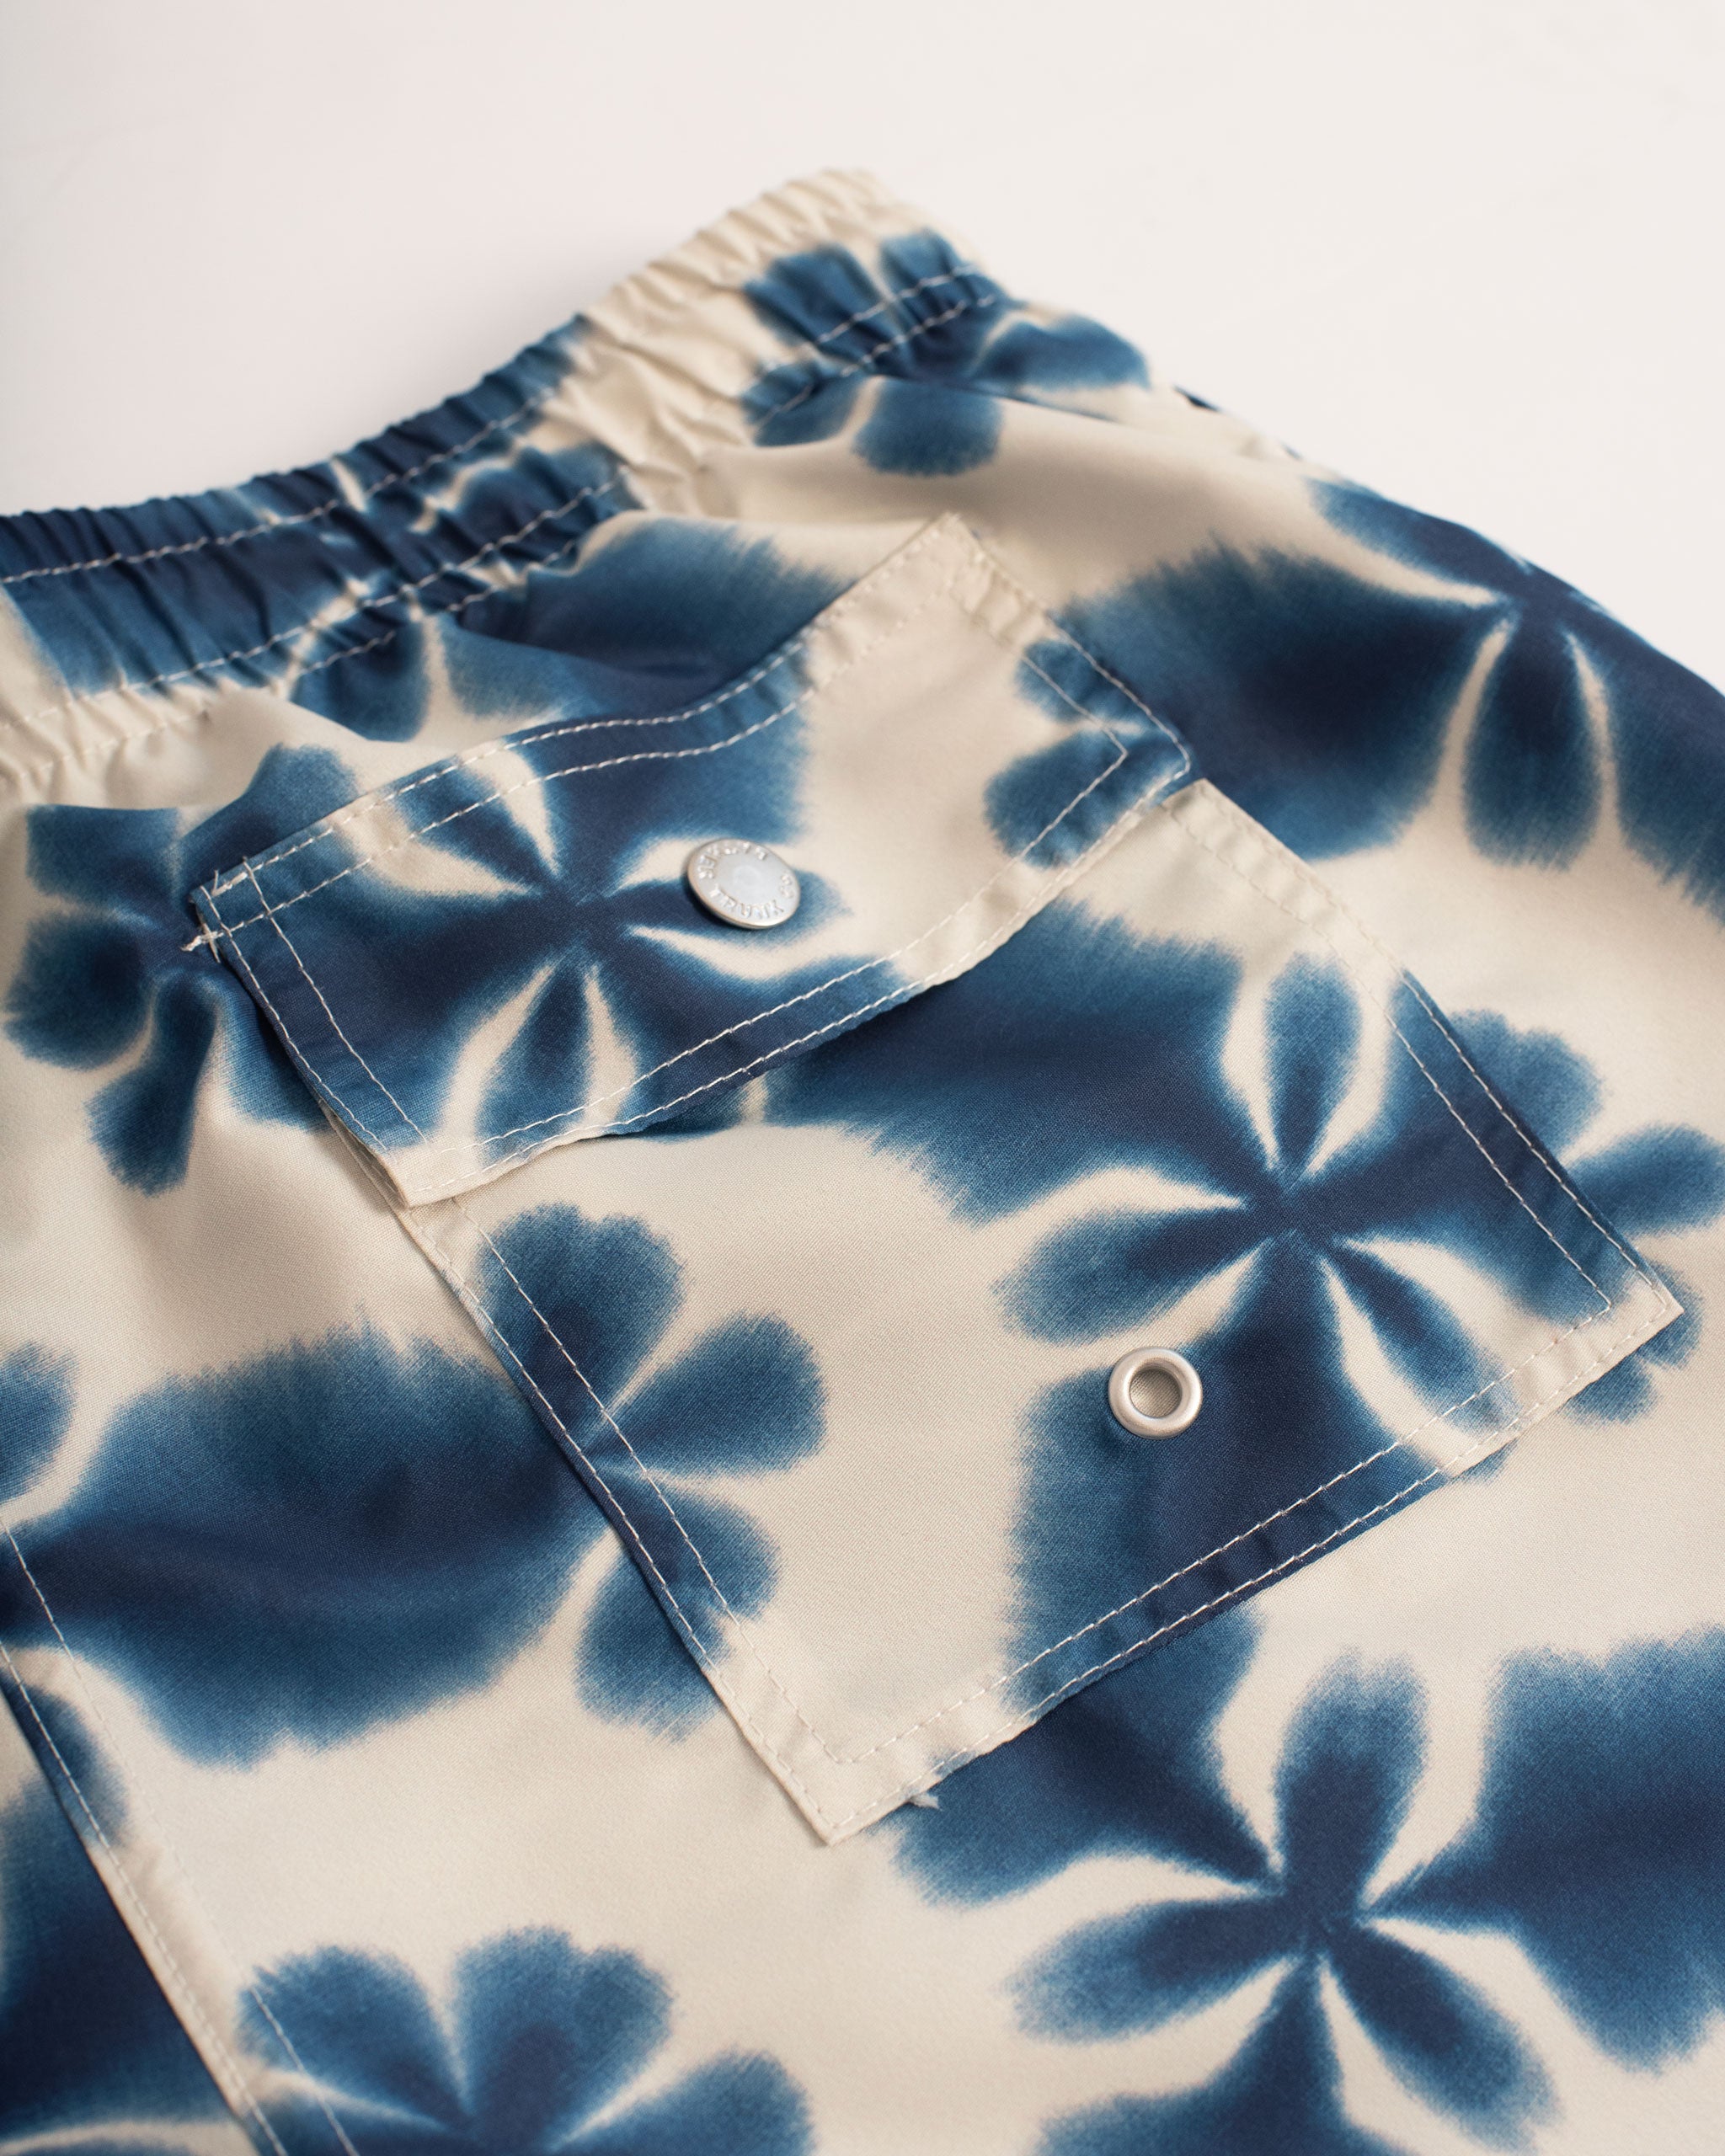 Back pocket shot of A navy swim trunk with a shibori-inspired print, similar to a kaleidoscope pattern